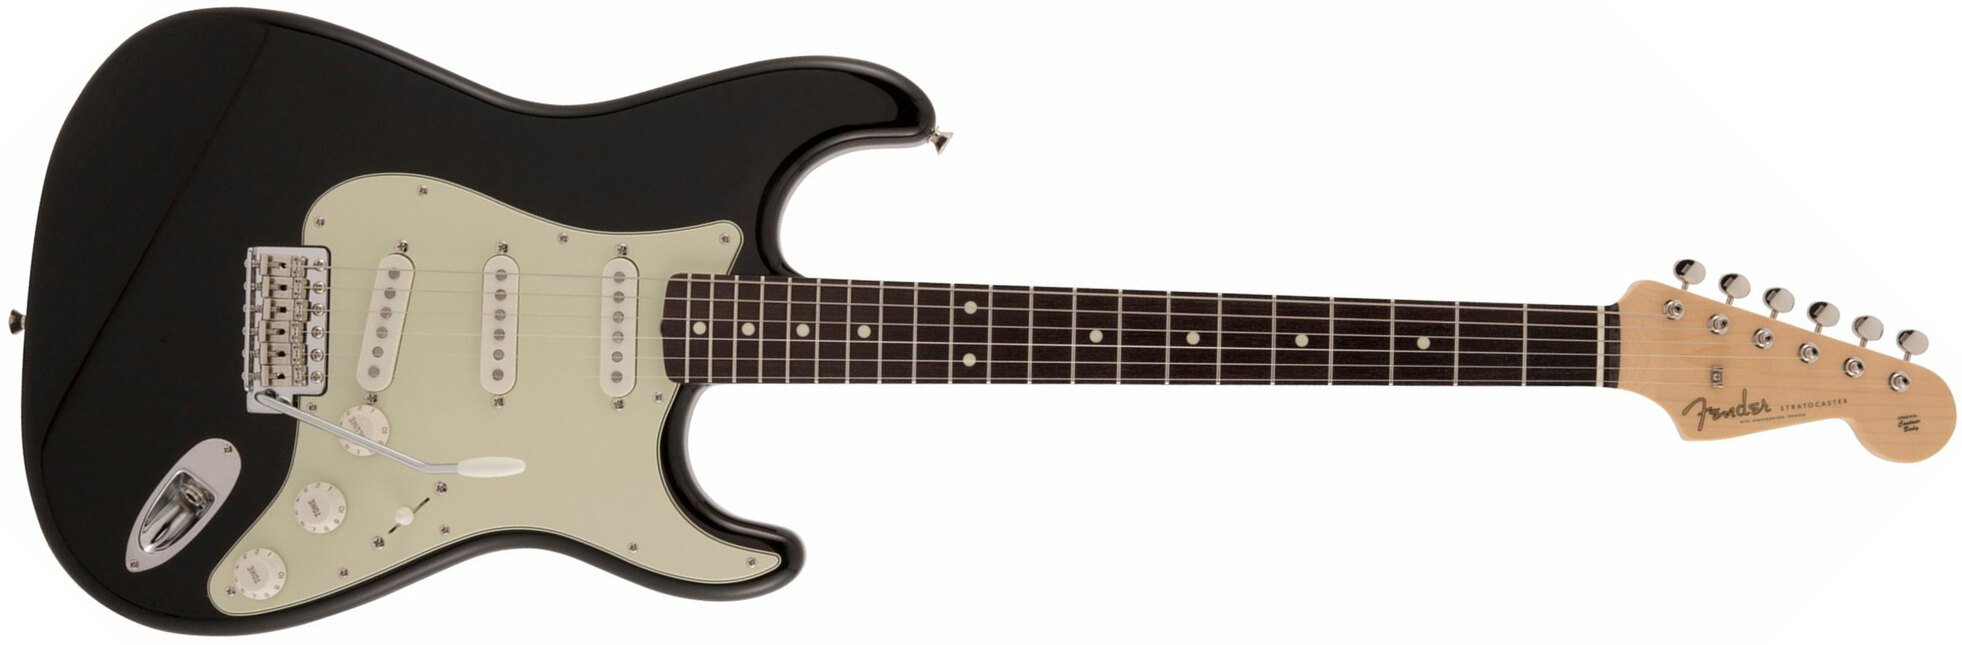 Fender Strat Traditional Ii 60s Mij Jap 3s Trem Rw - Black - E-Gitarre in Str-Form - Main picture